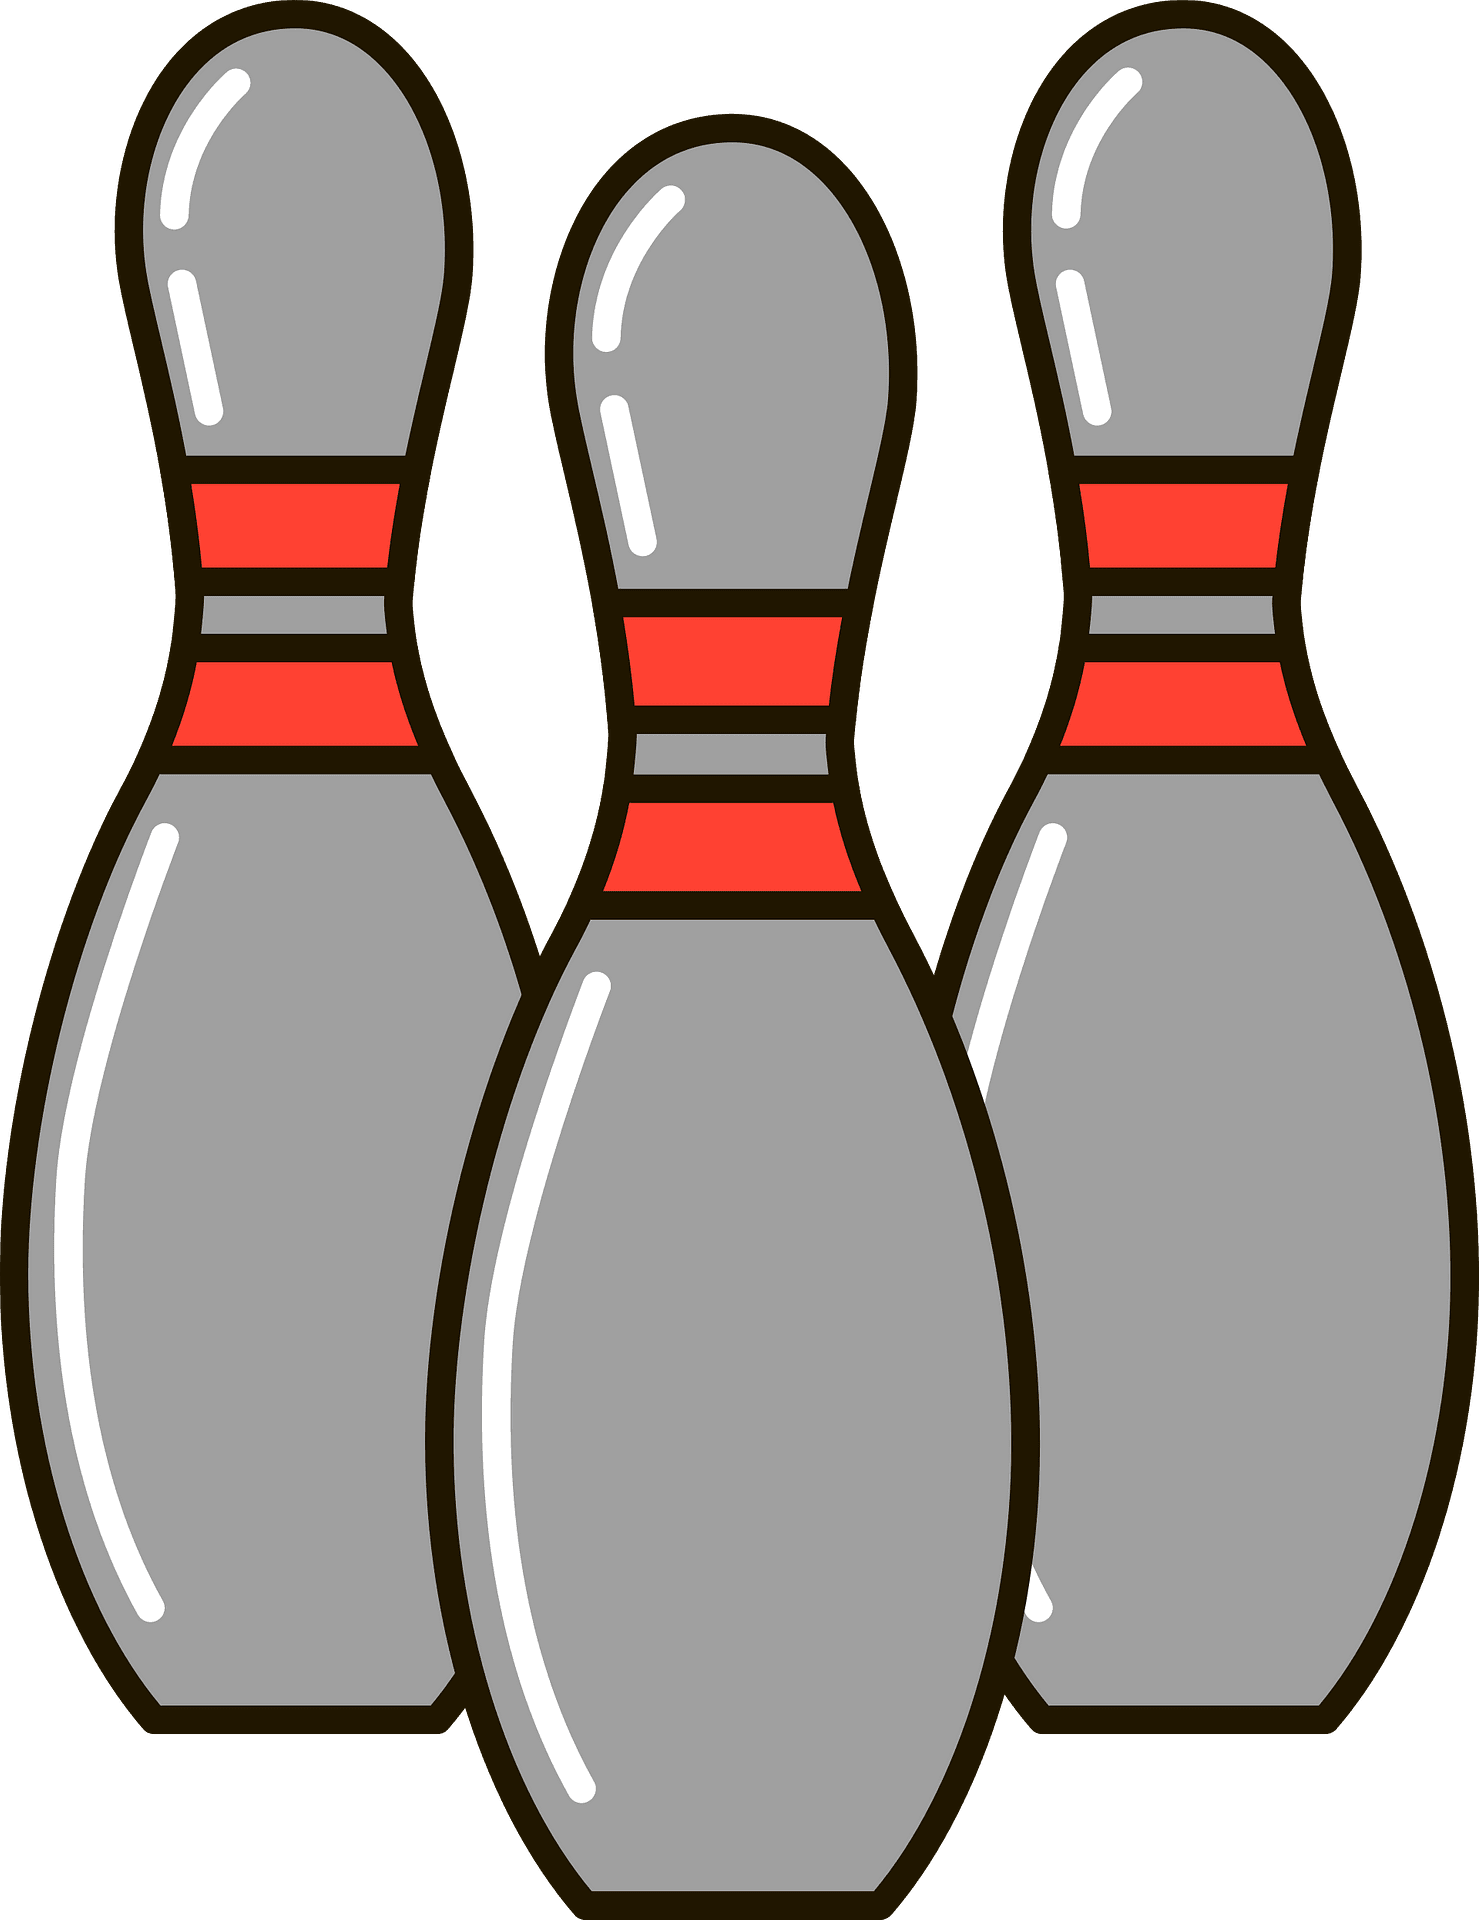 Bowling pin clipart image